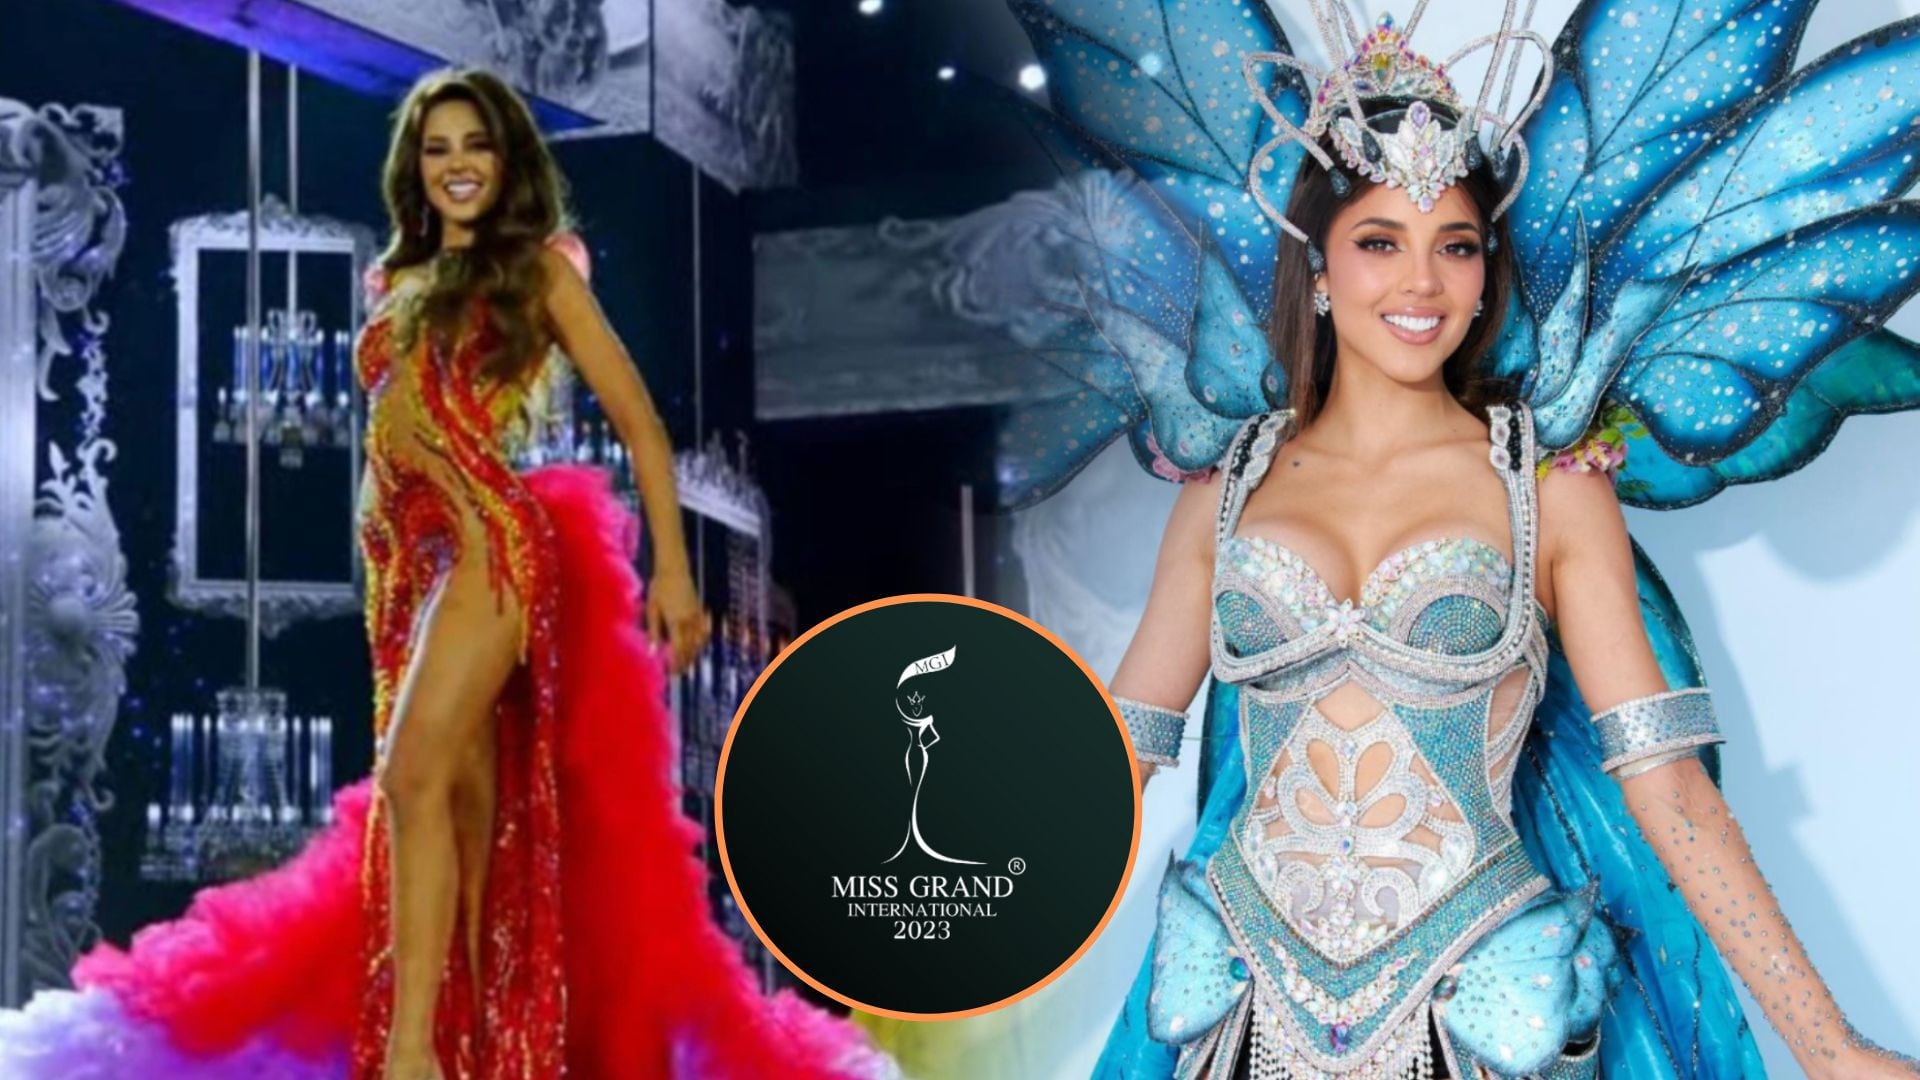 Minuto a minuto de la gran final de Miss Grand International 2023, en la que Luciana Fuster podría llevarle la segunda corona a Perú.